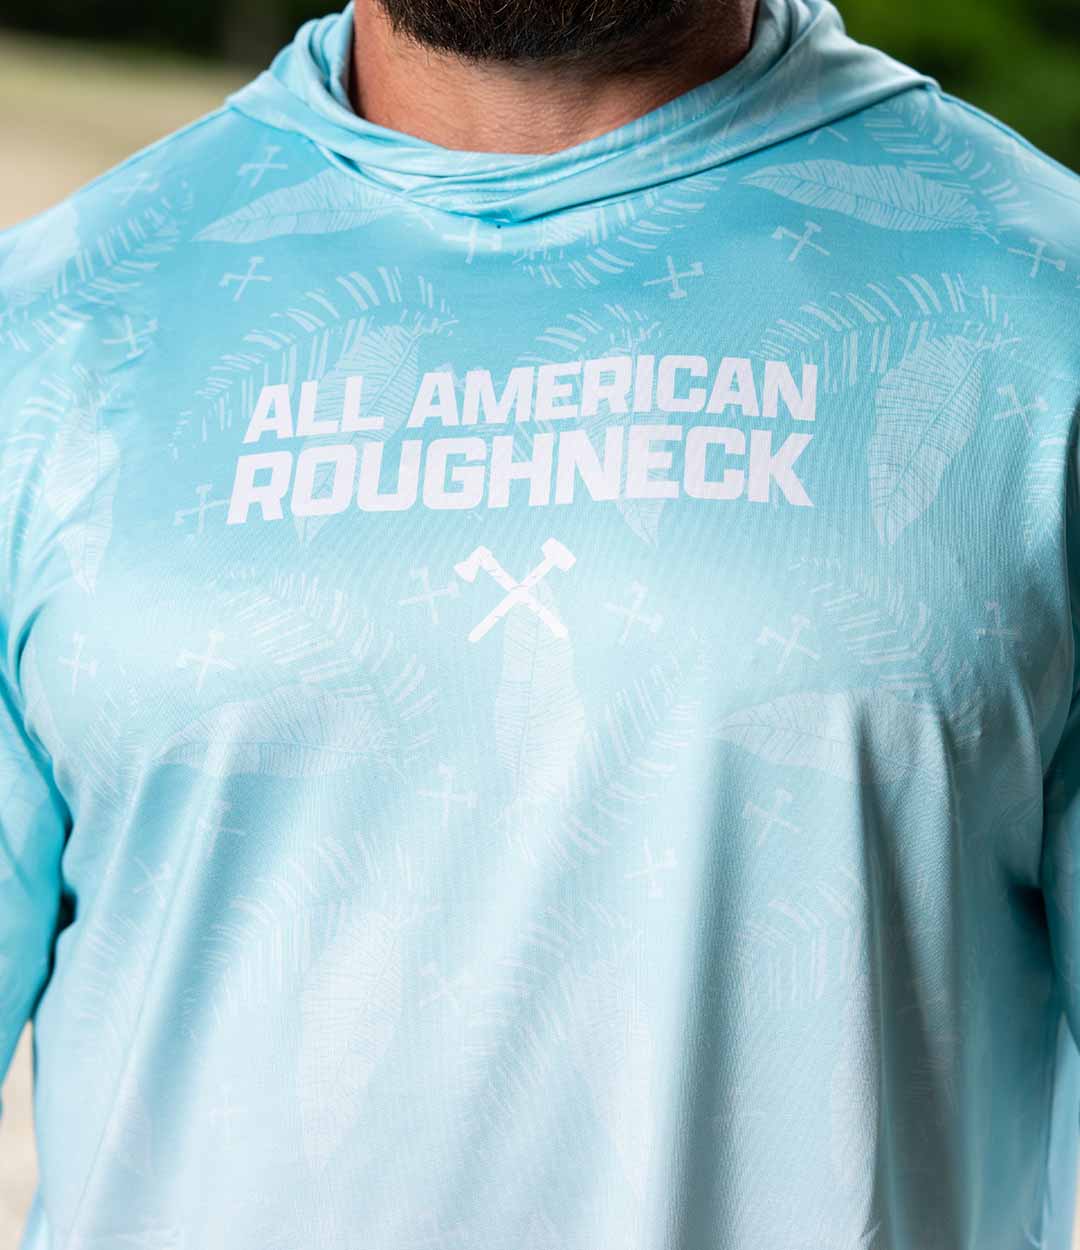 Bahama Hoodie Fishing Shirt - All American Roughneck